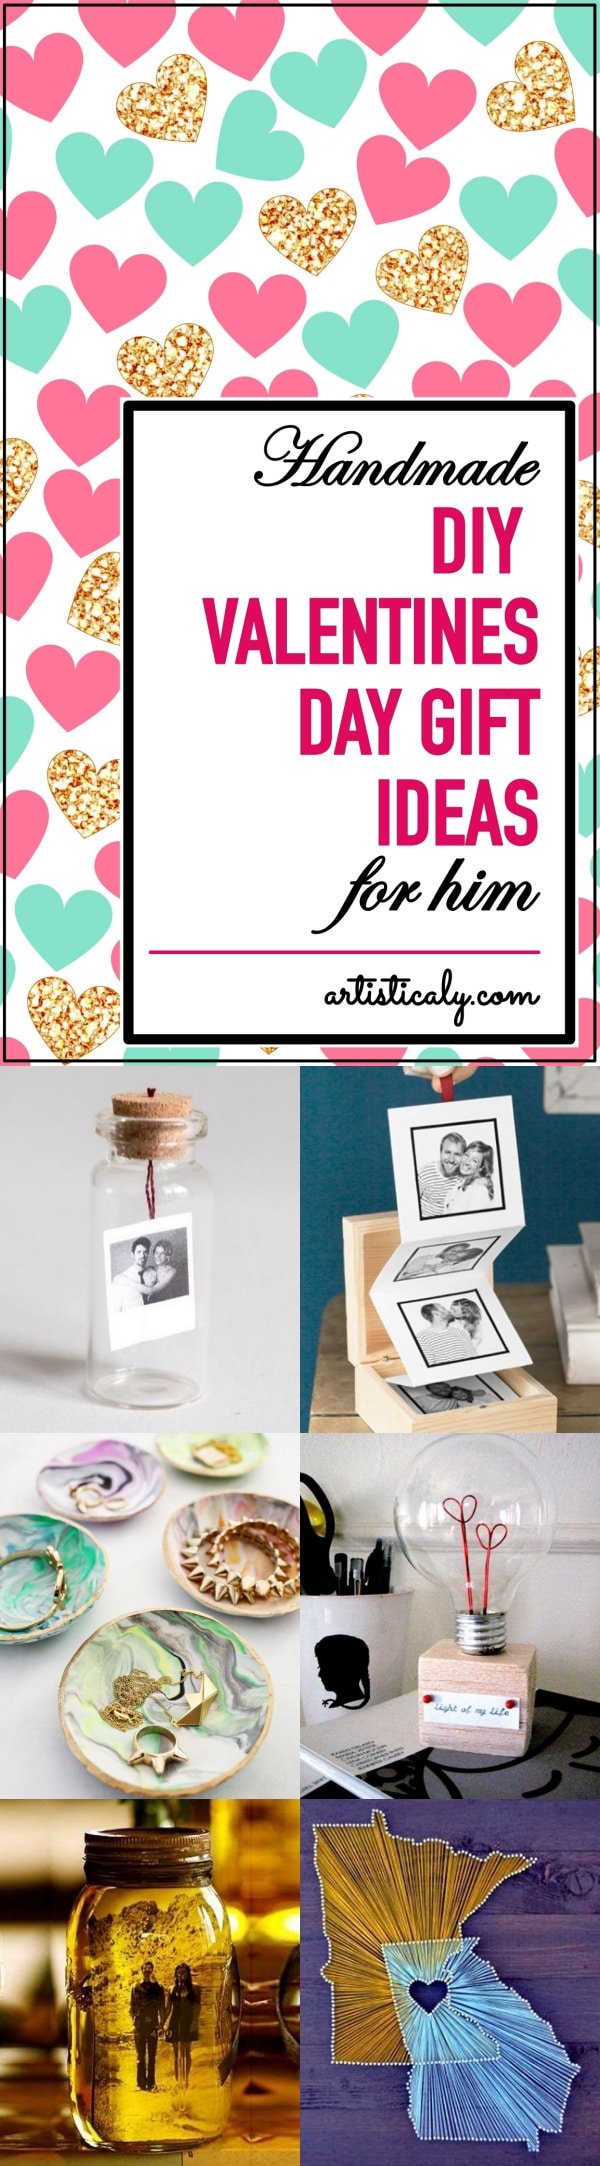 Handmade-DIY-Valentines-day-Gift-Ideas-for-him